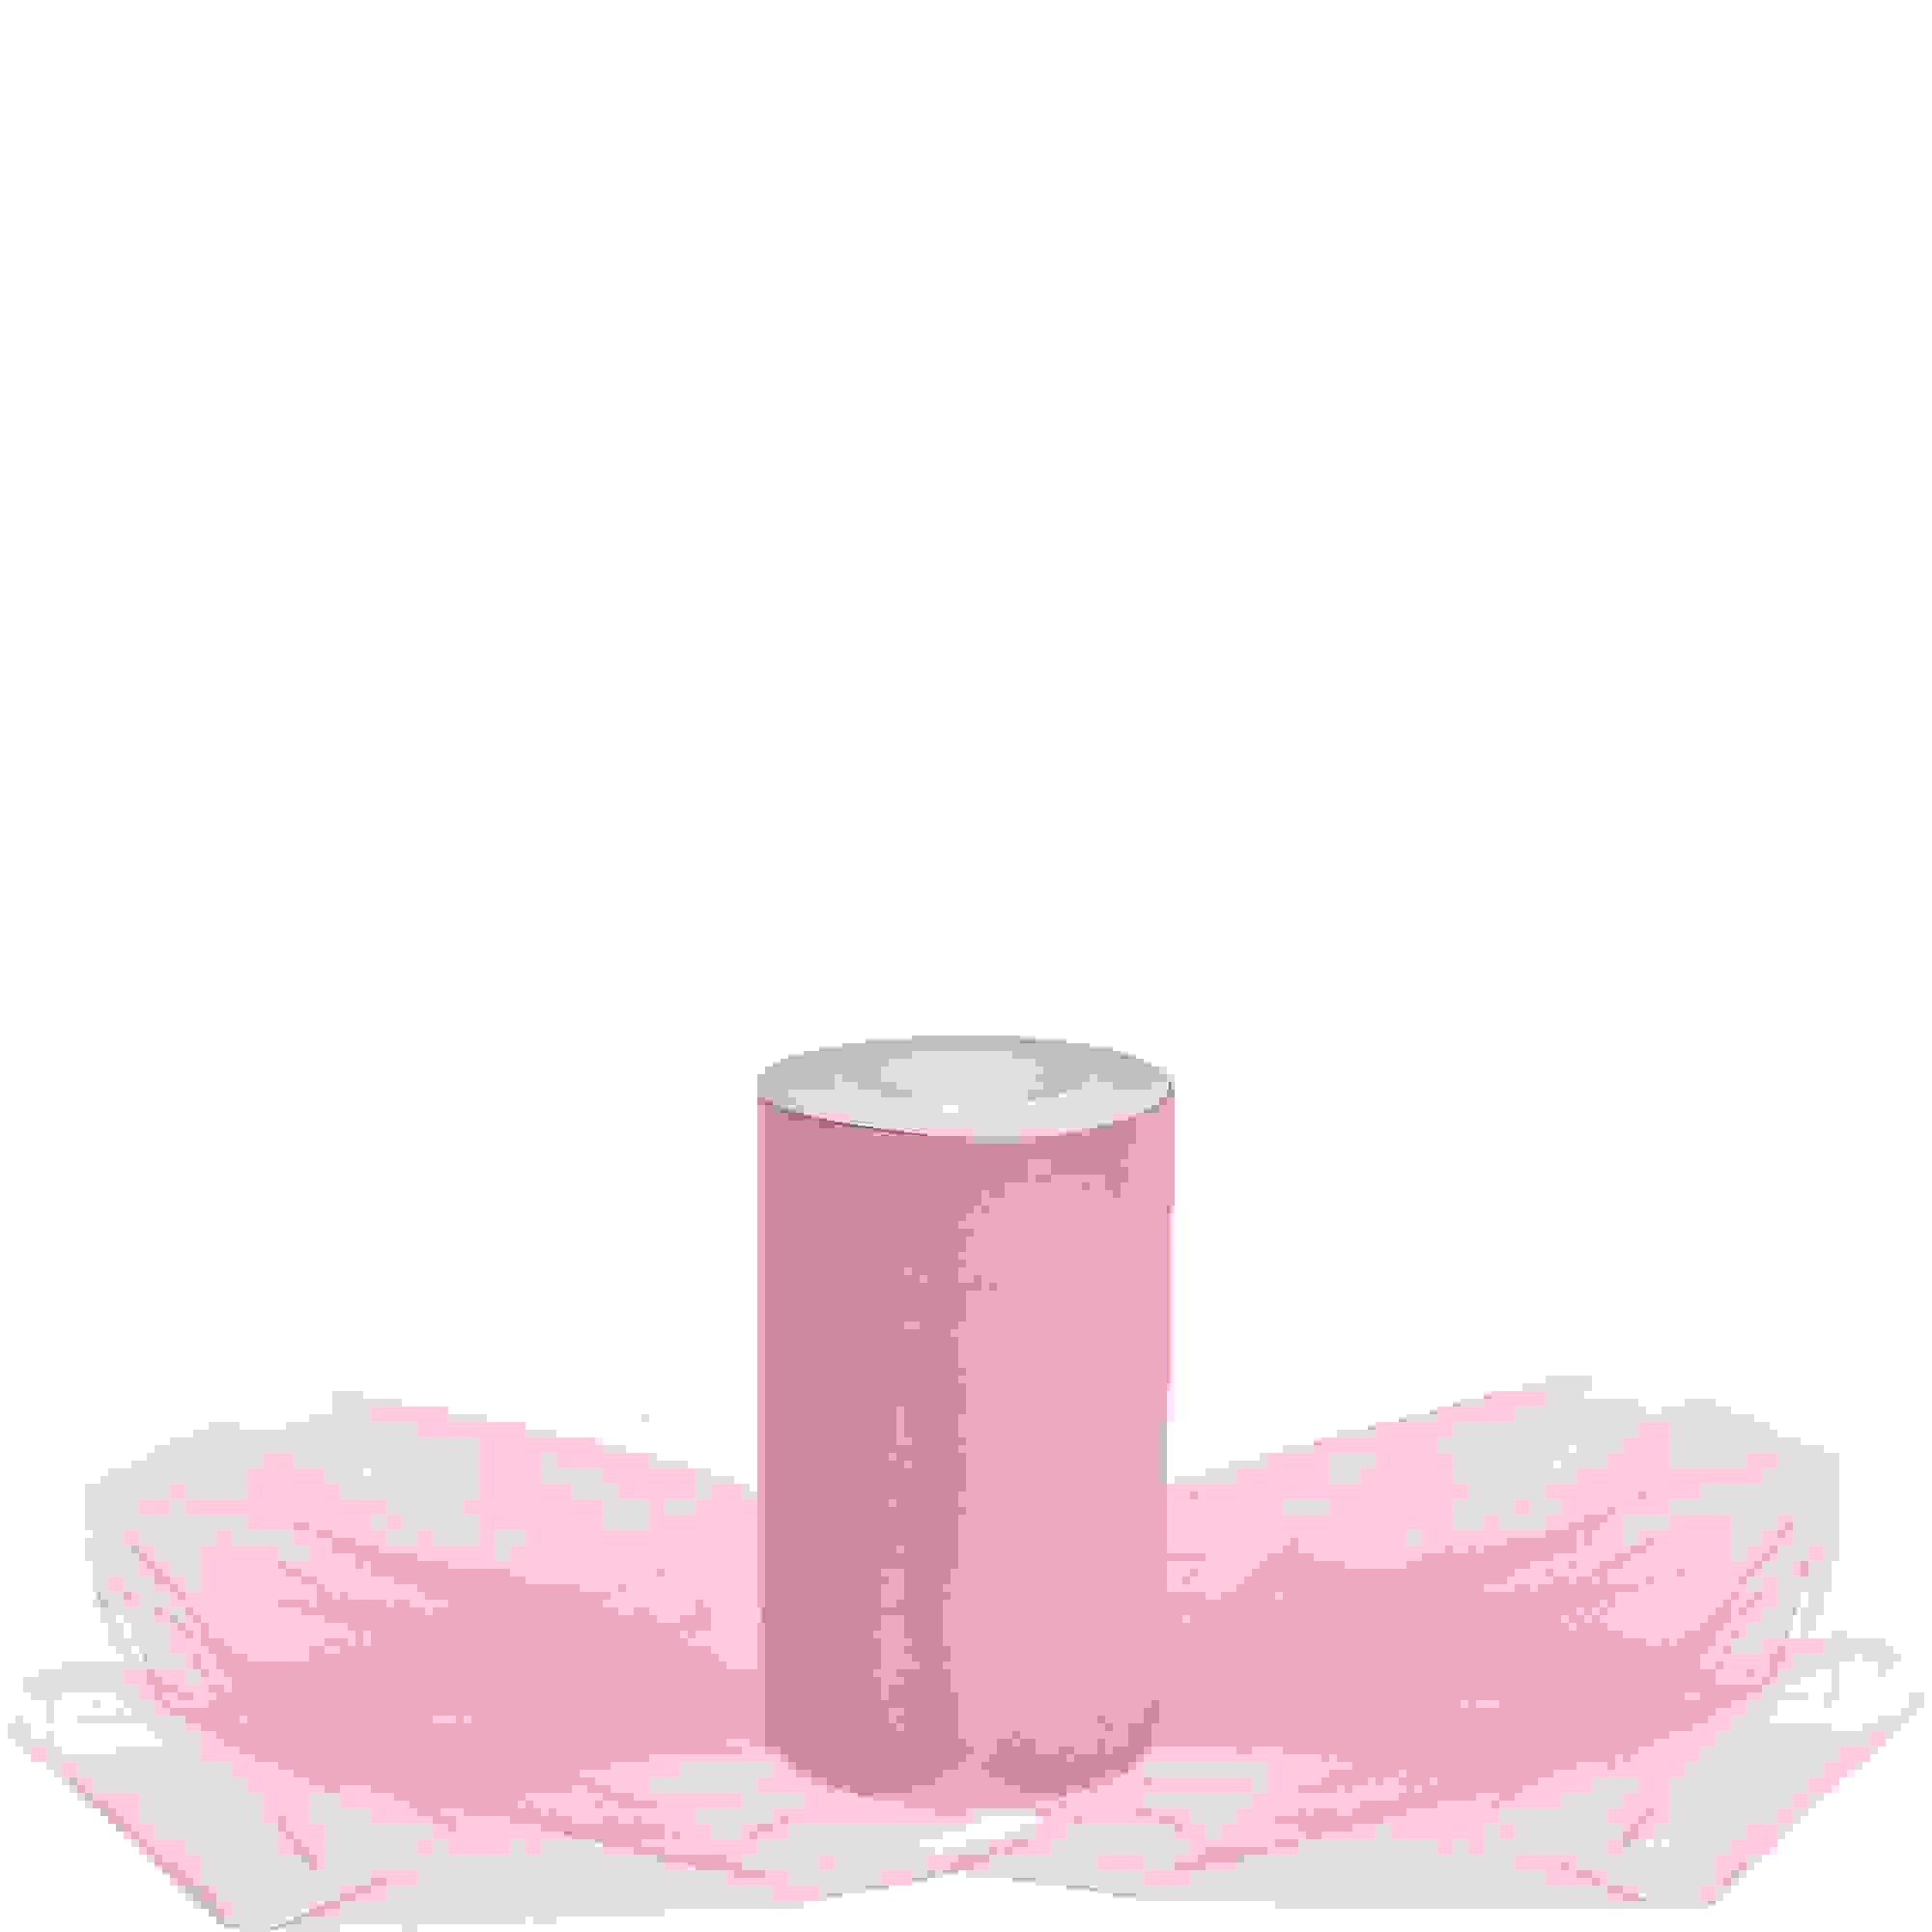 Blush Pink Tulle Spool, 65yd